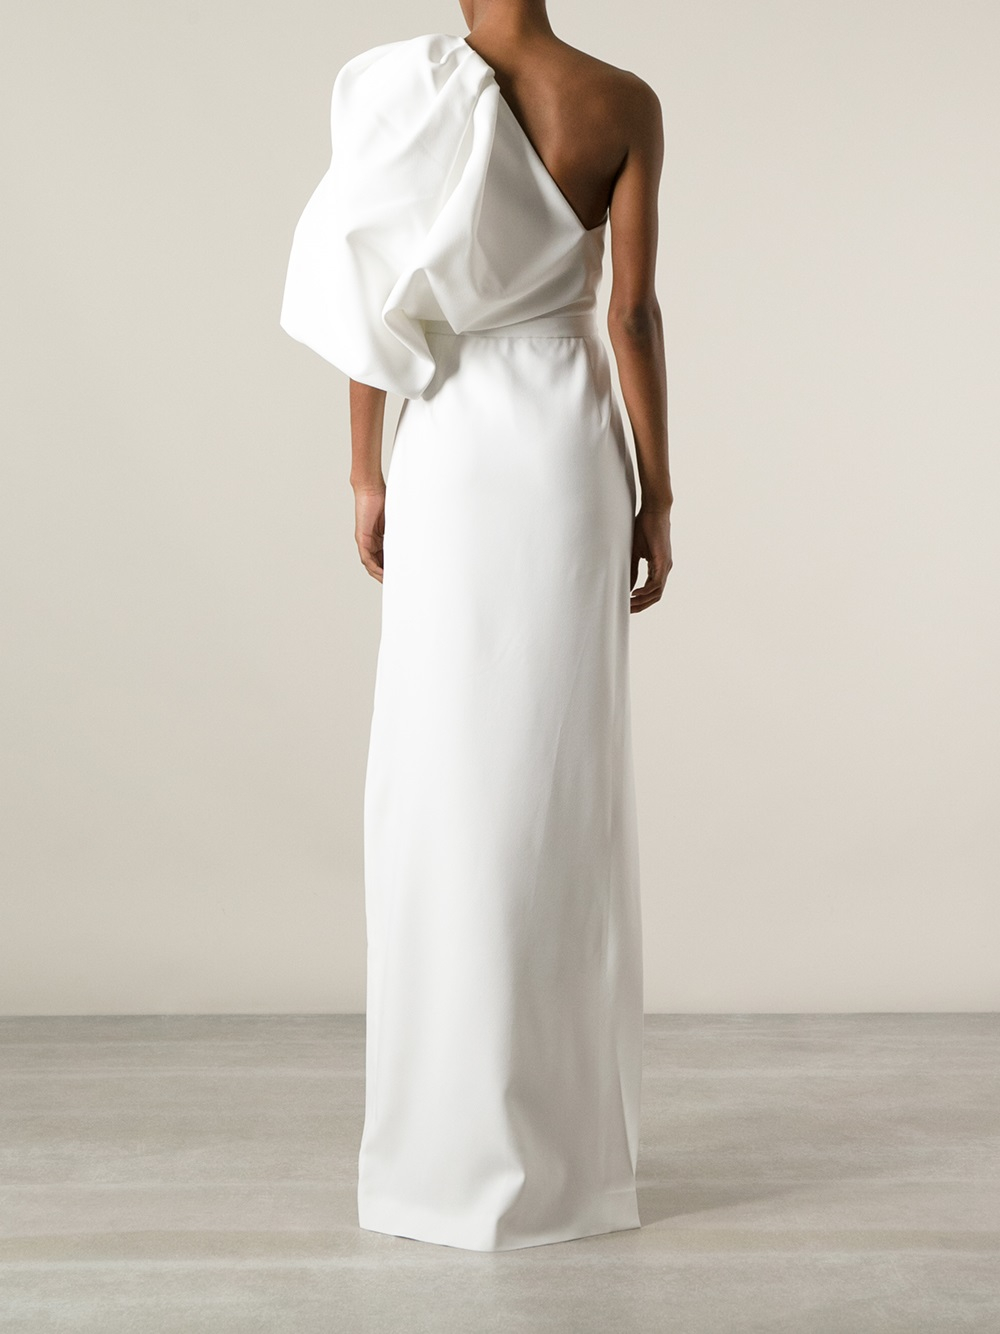 Saint Laurent Puff Sleeve One Shoulder Dress in White